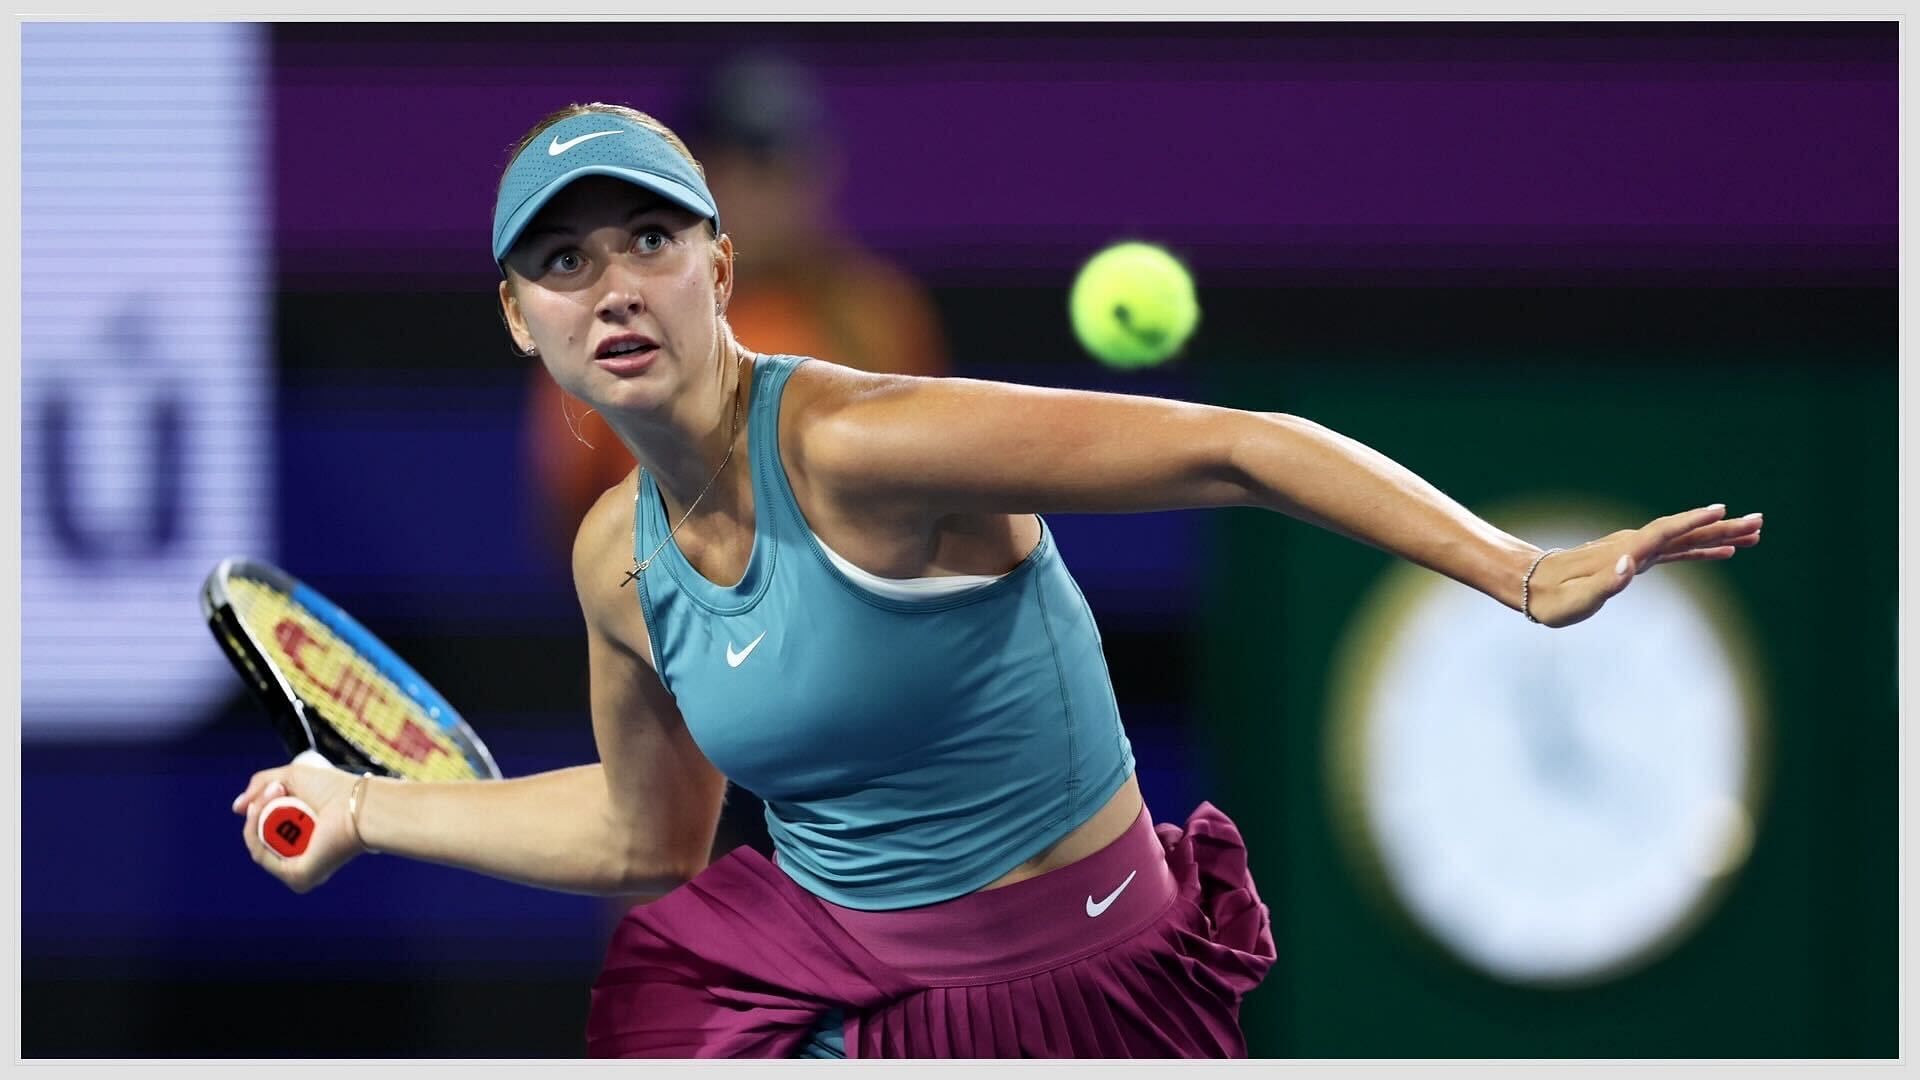 Anastasia Potapova takes on Veronika Kudermetova in the third round of the Italian Open